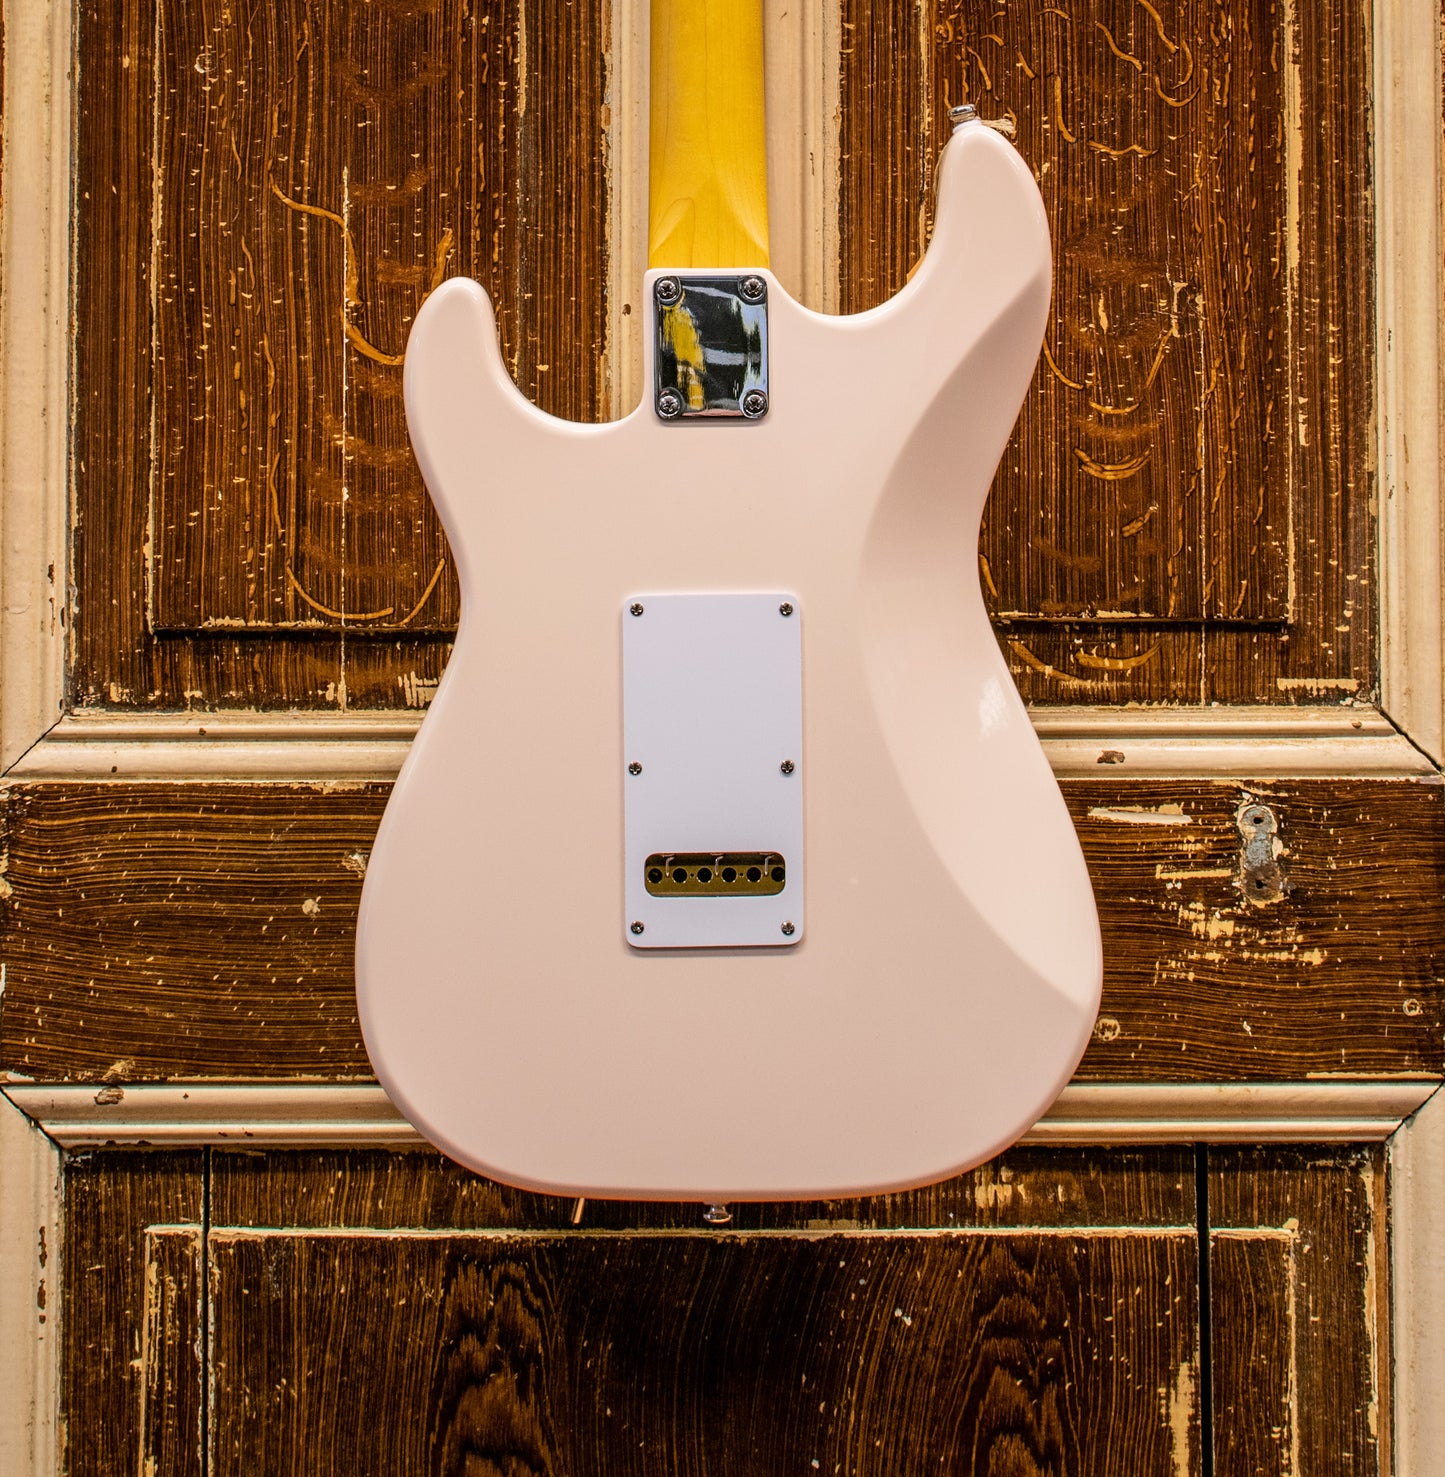 G&L Standard Stratocaster White/Seafoam Pink